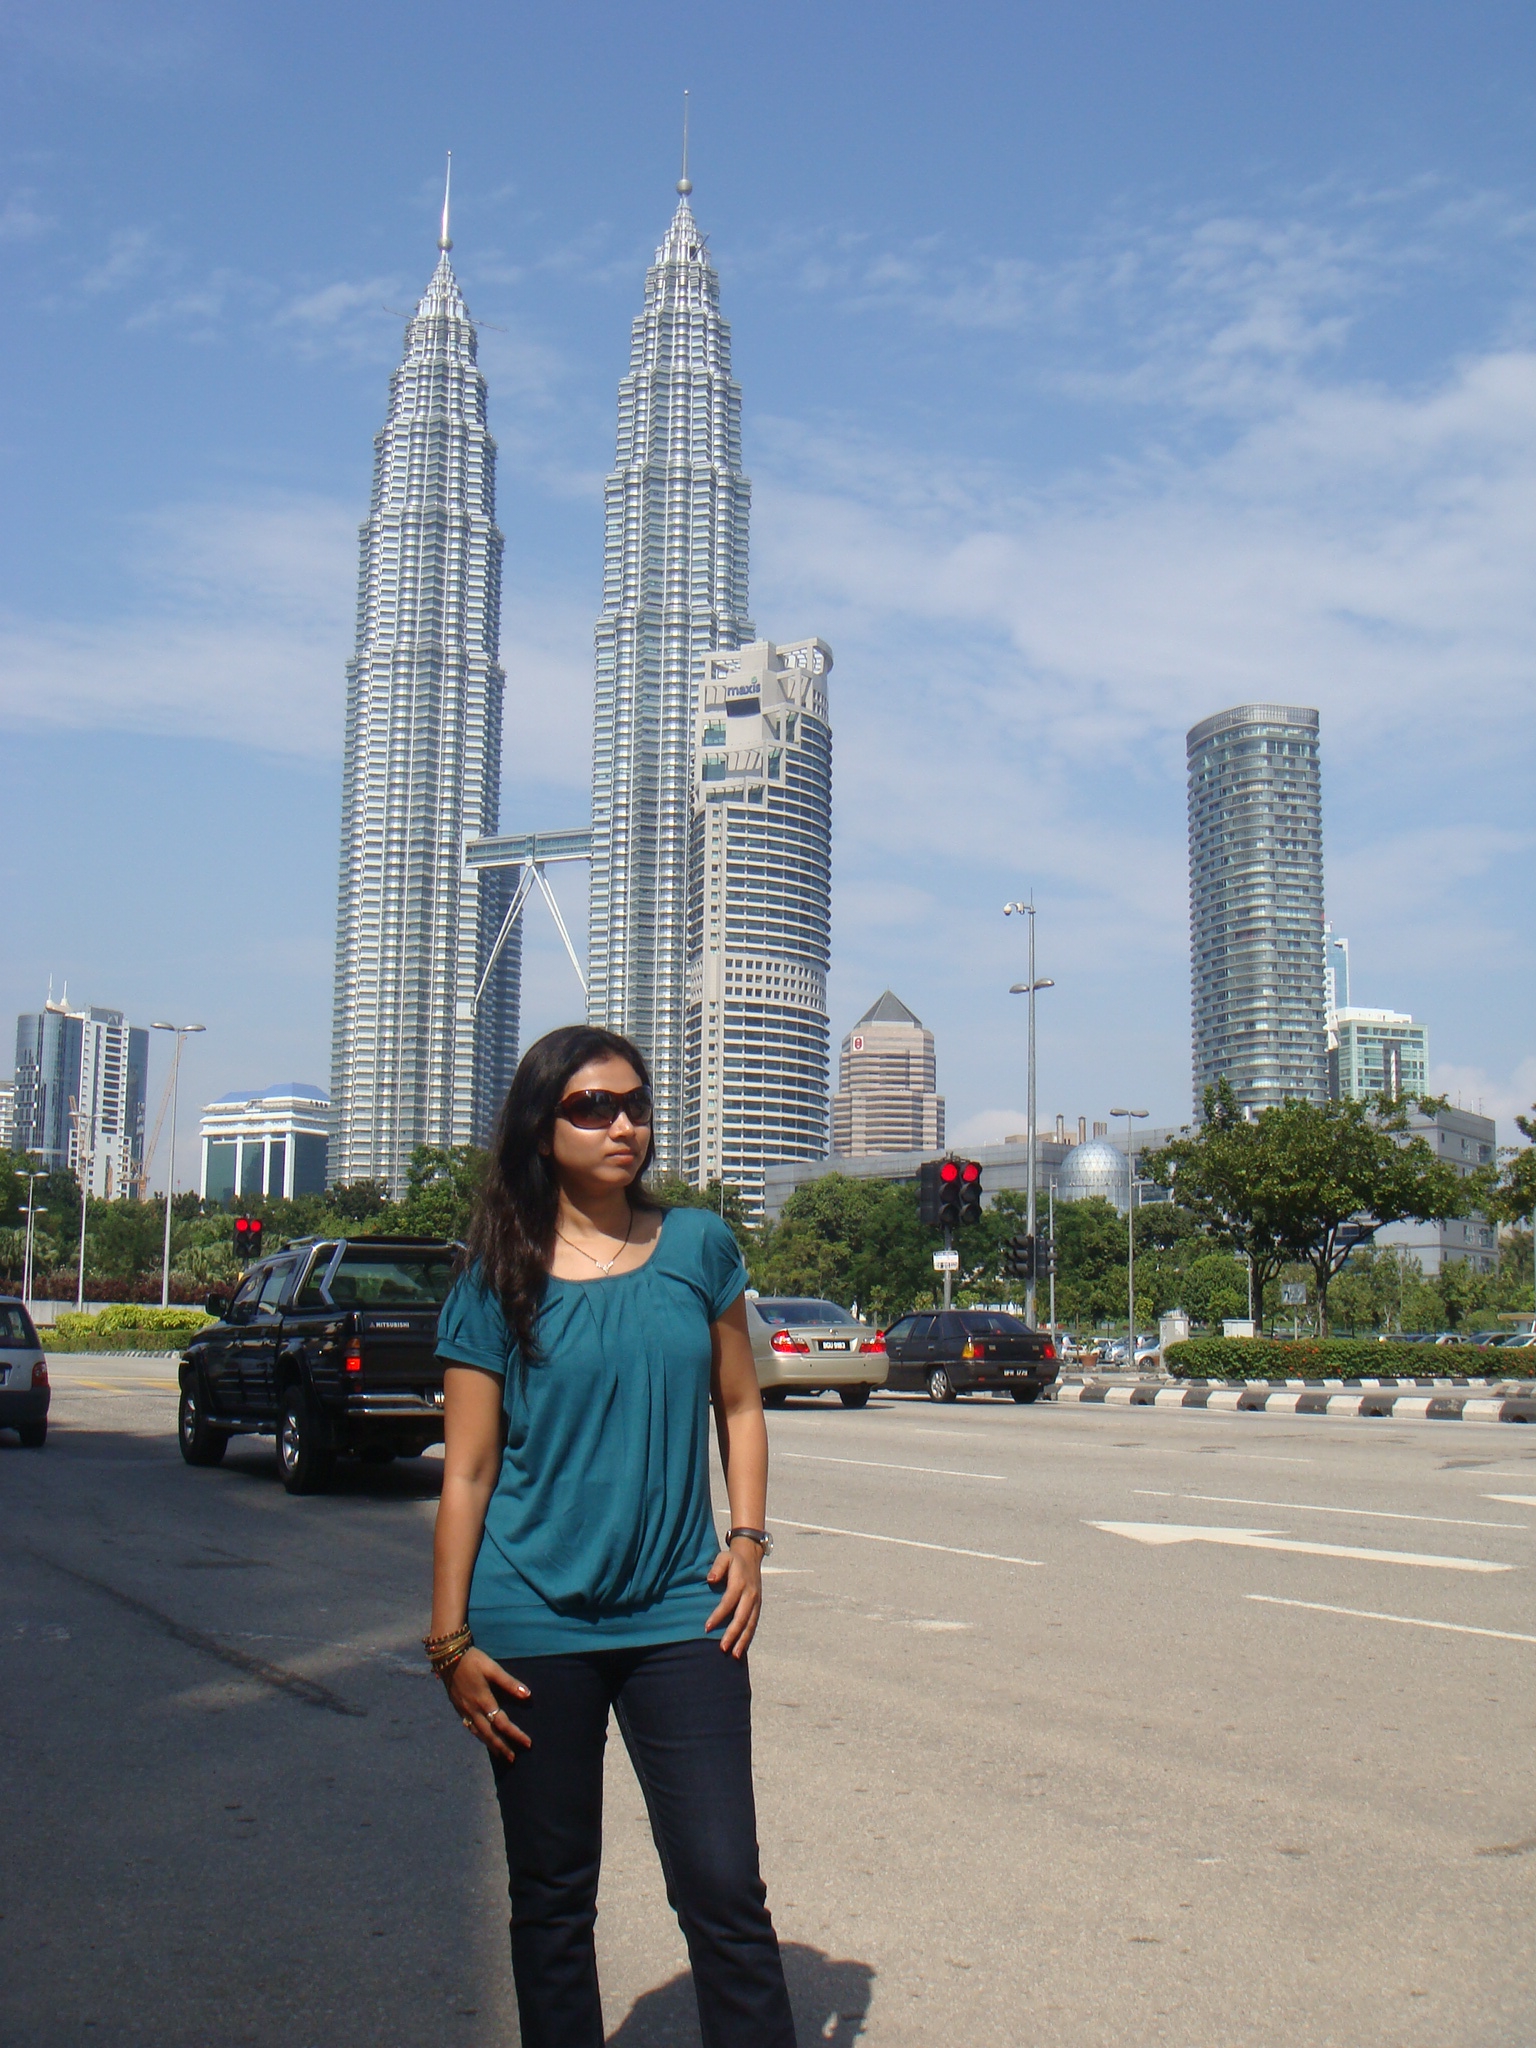 Malaysia skyline, twin towers